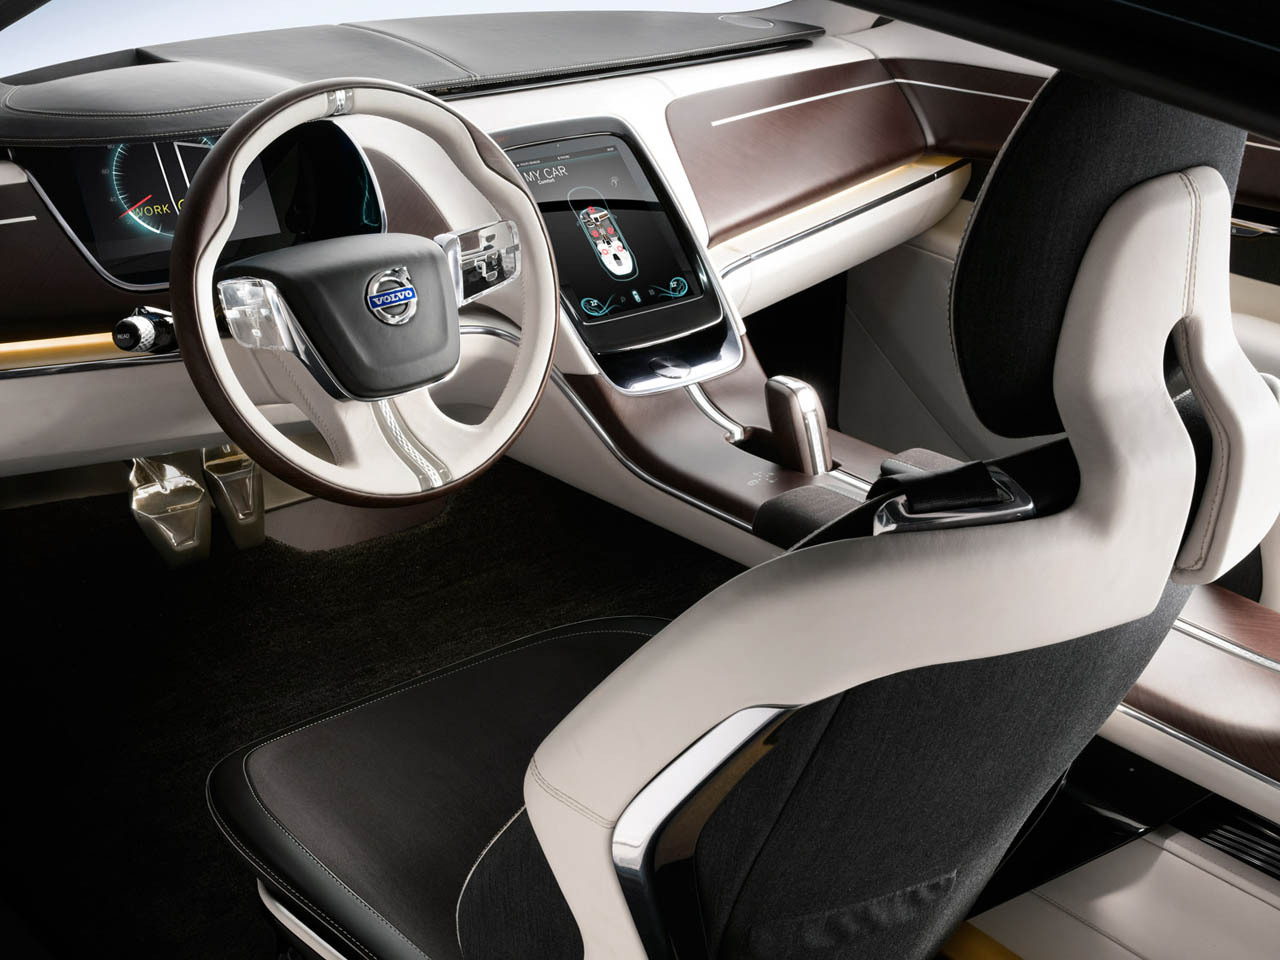 Volvo Concept You are un interior foarte luxos, dar vine si cu inovatii tehnologice interesante